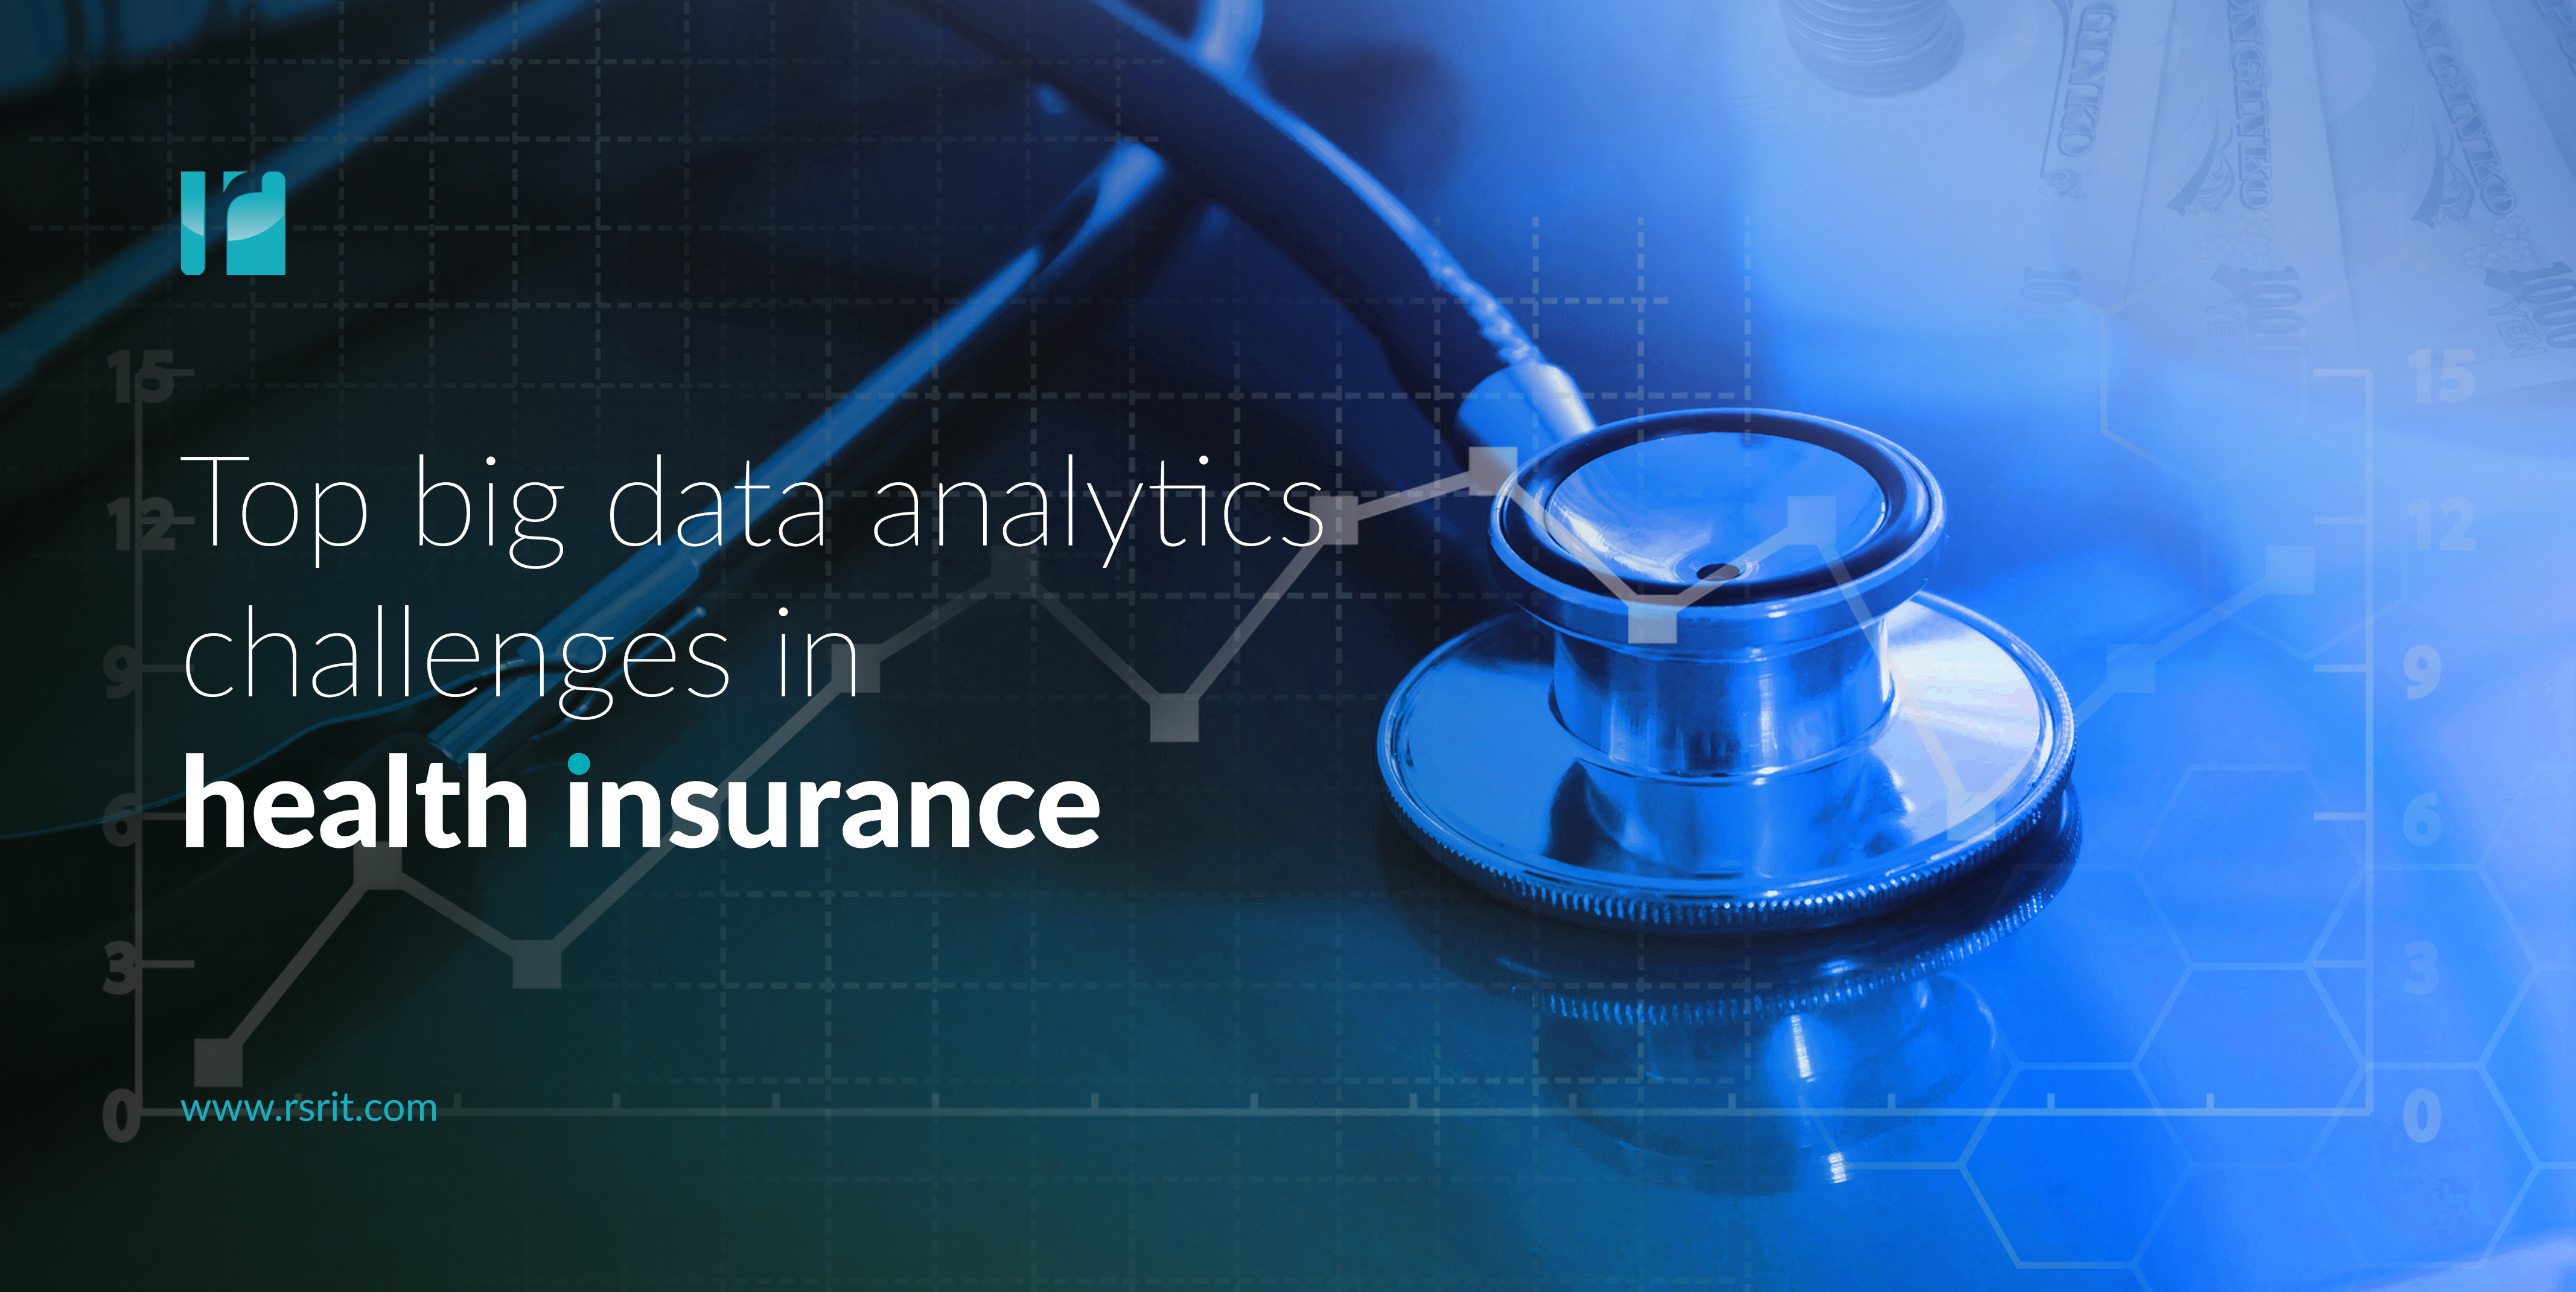 Top big data analytics challenges in health insurance